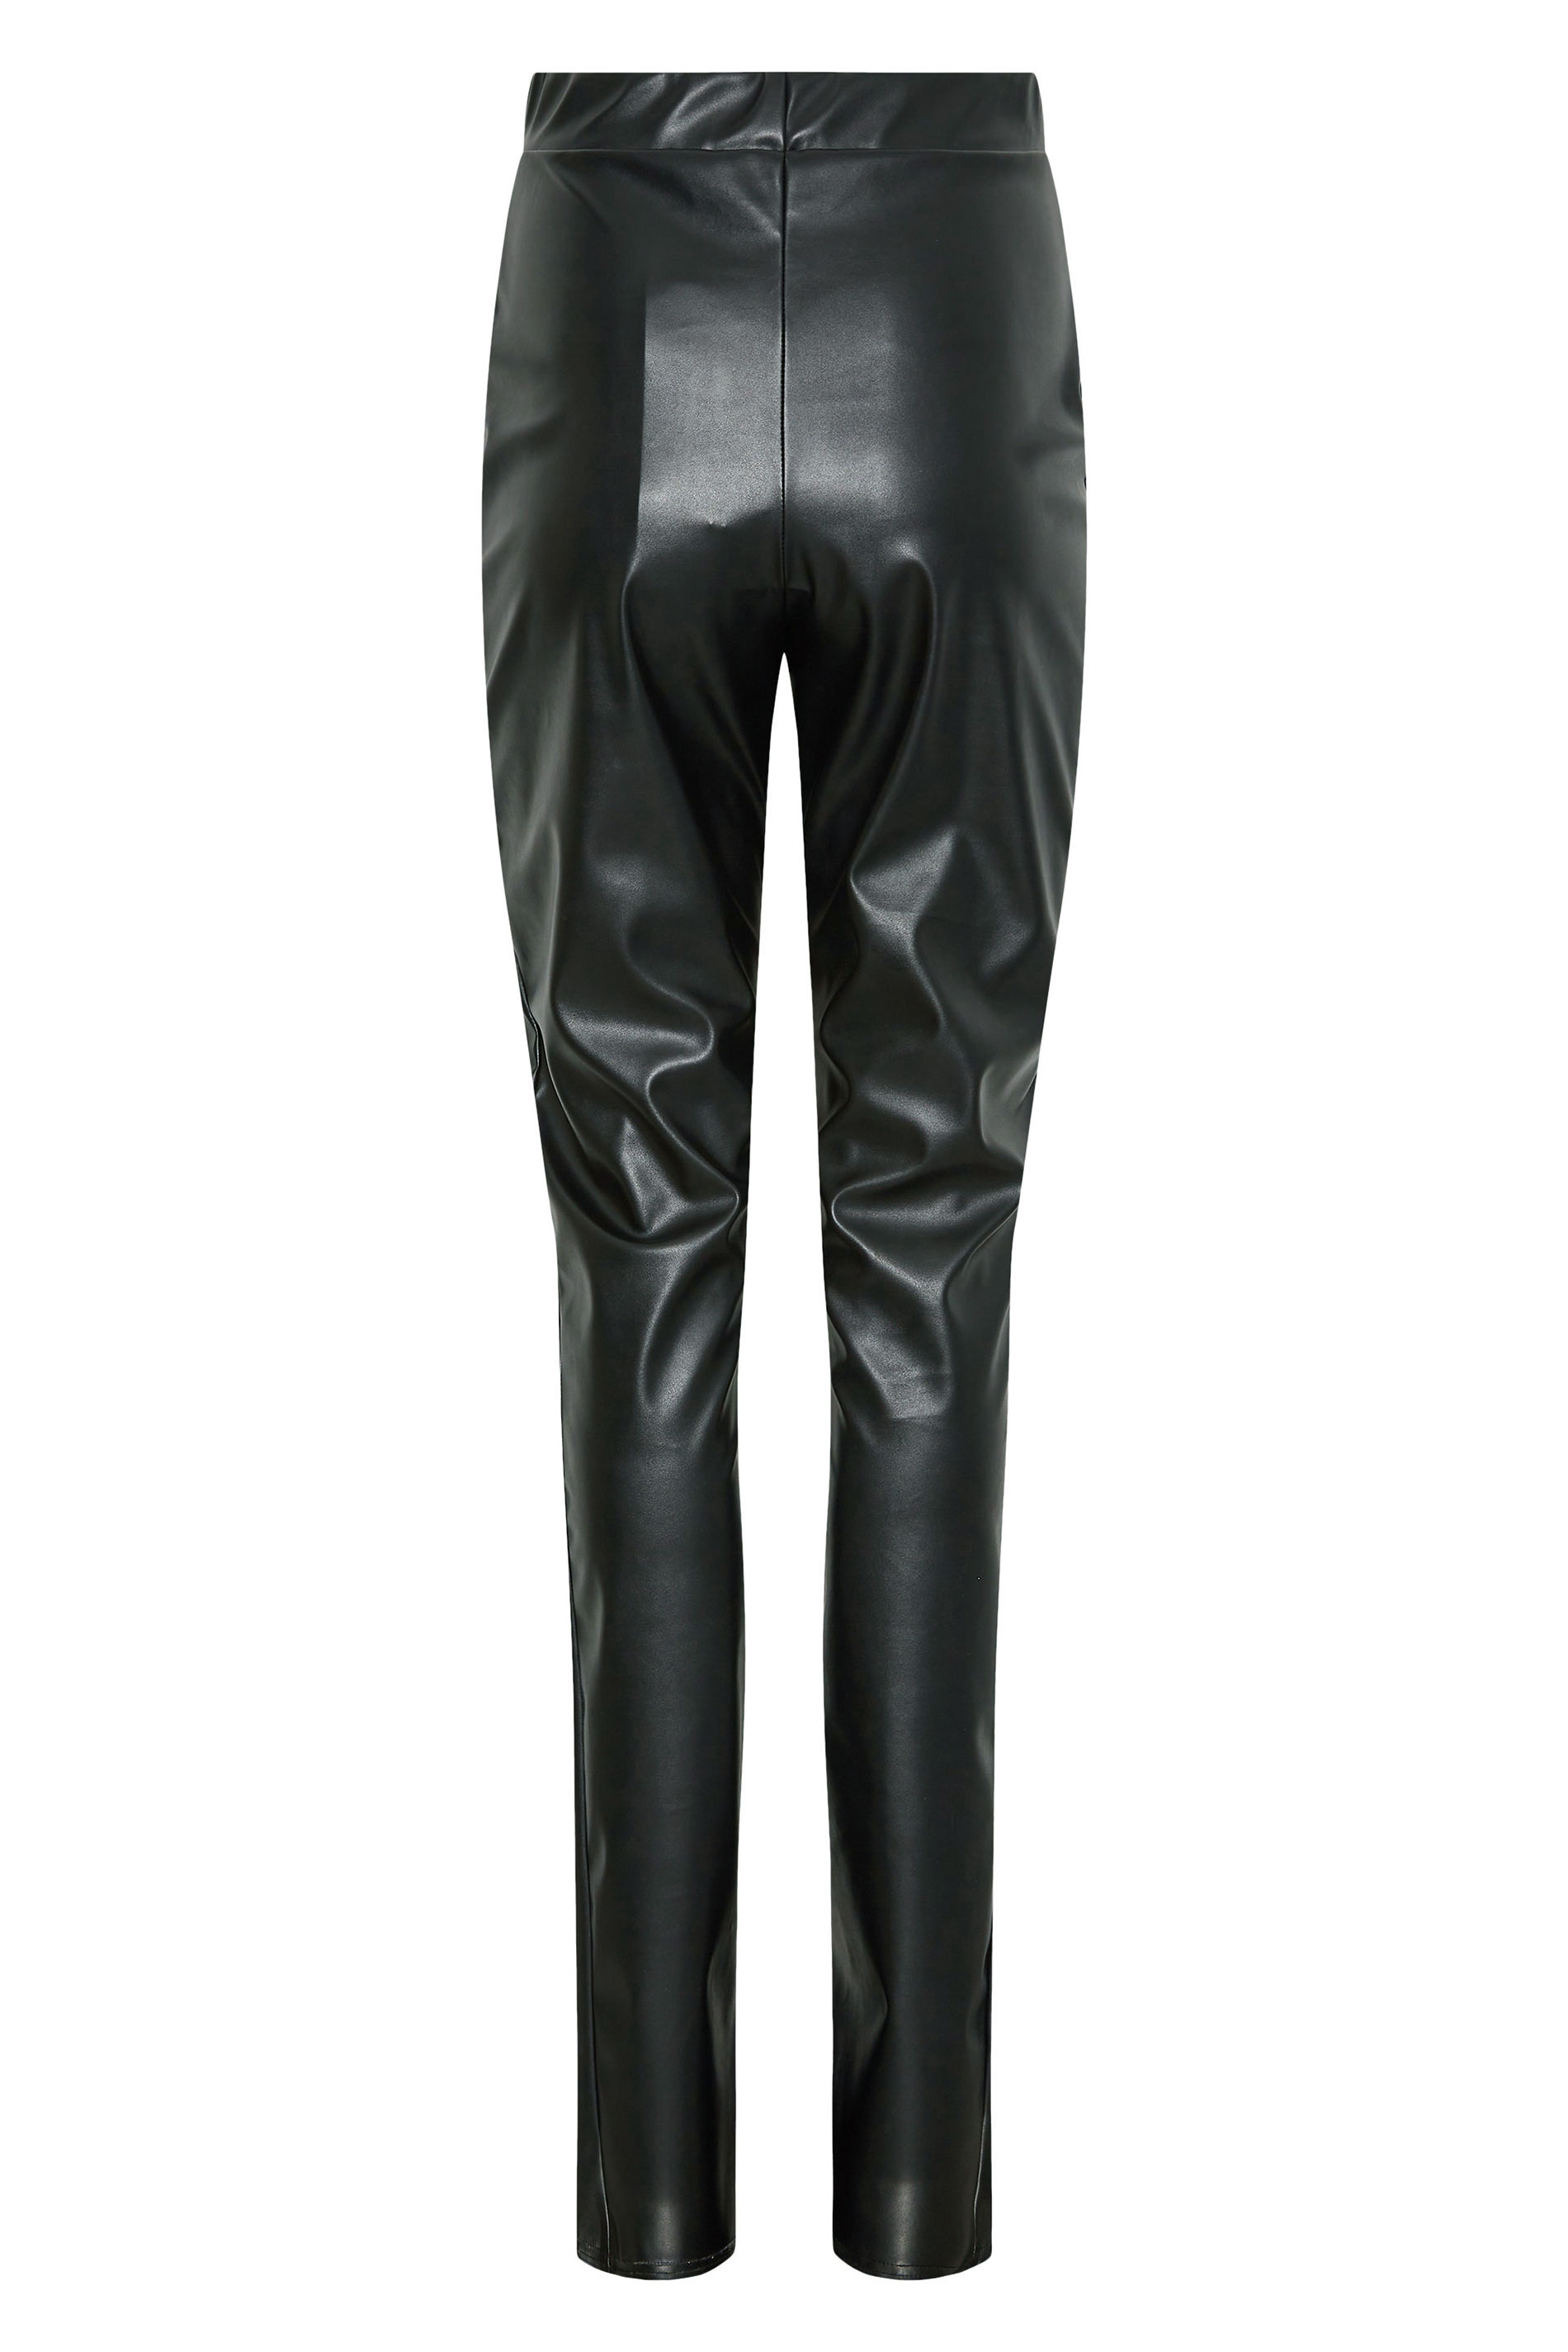 LTS Tall Women's Black Leather Look Slim Leg Trousers | Long Tall Sally